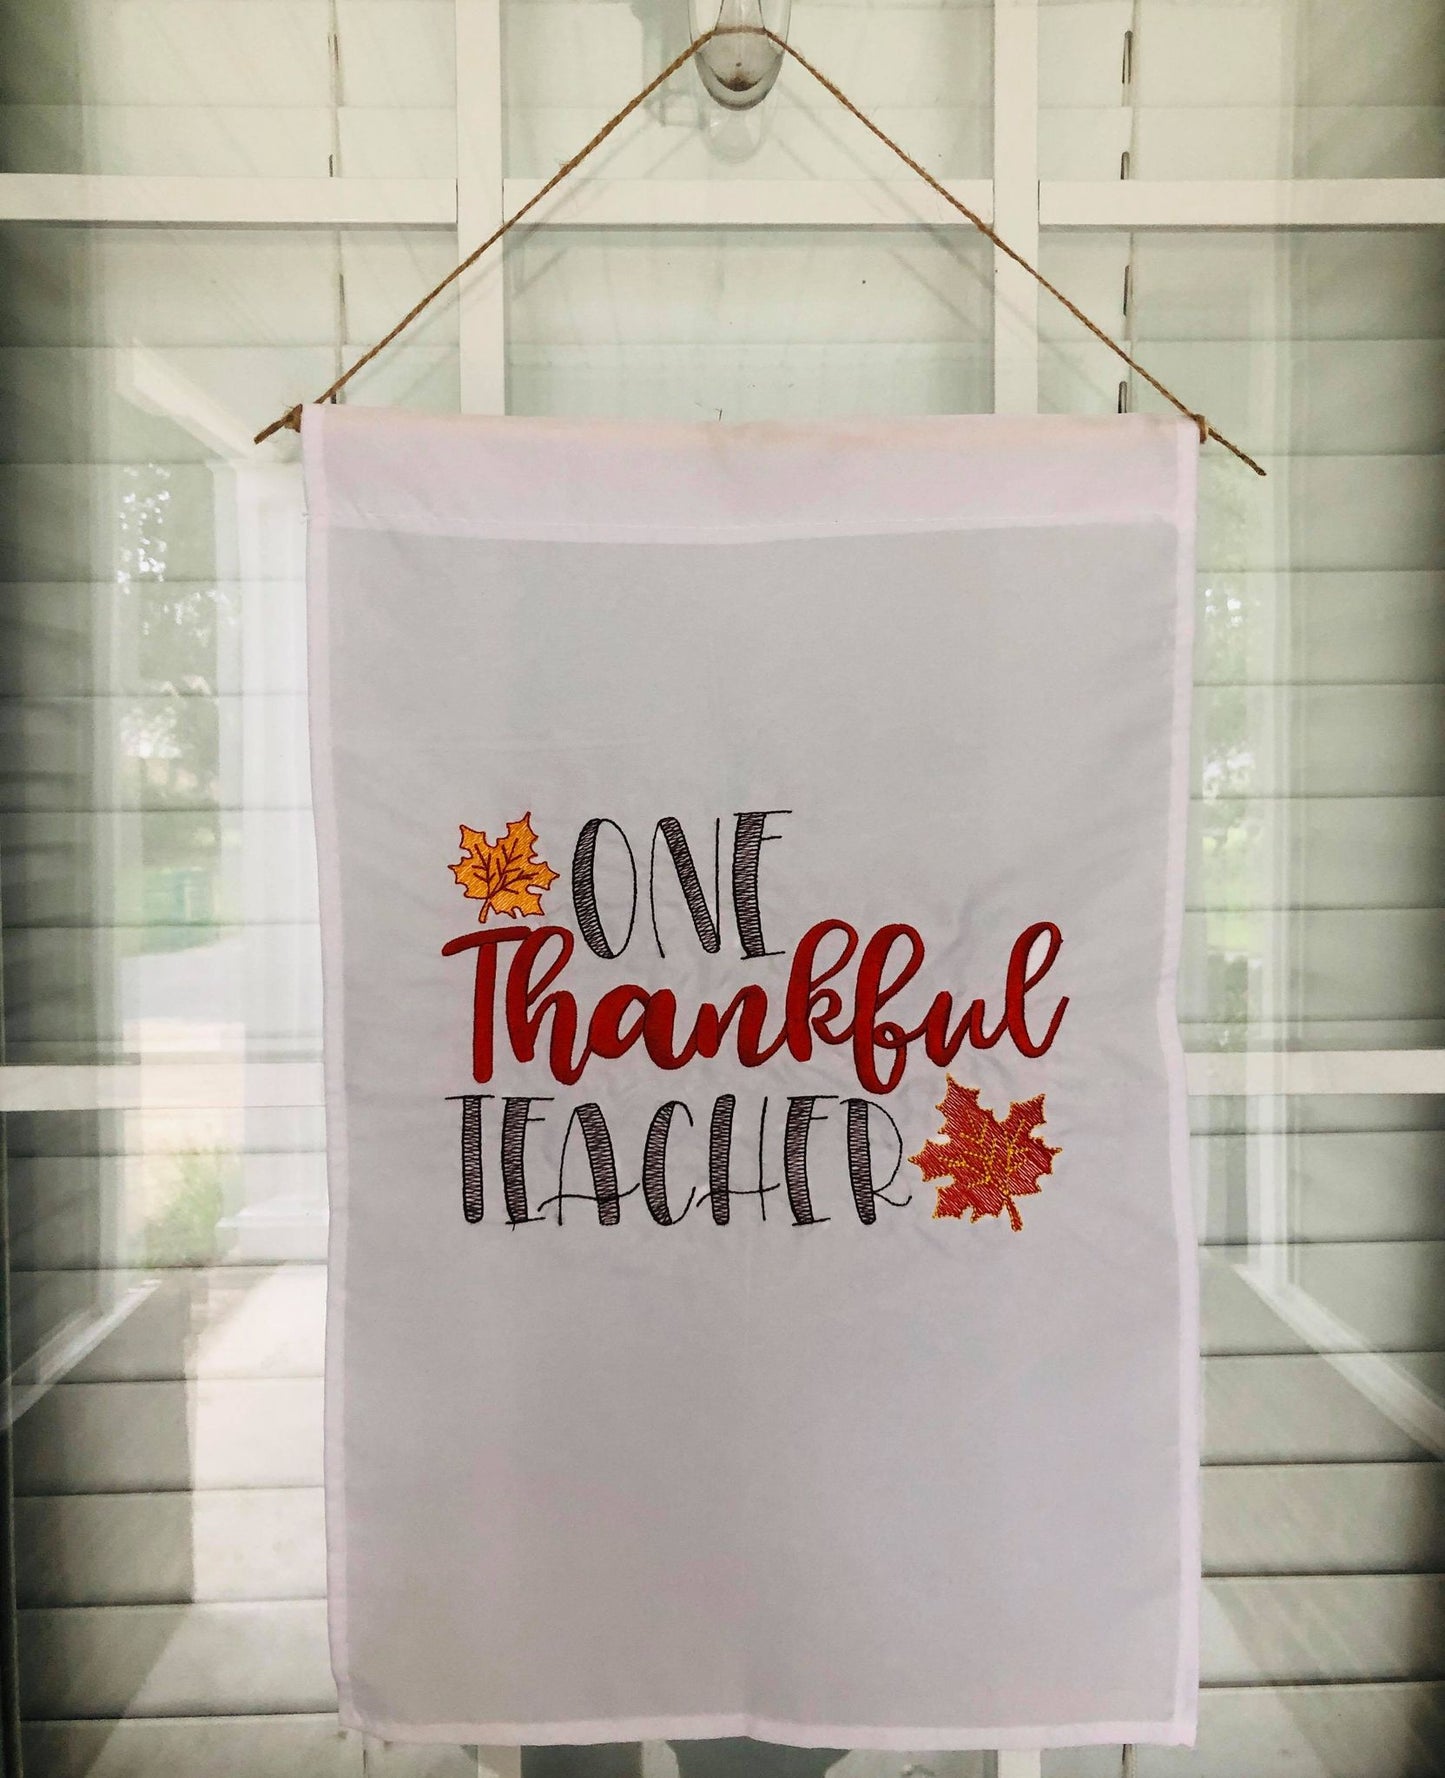 One Thankful Teacher - 2 Sizes - Digital Embroidery Design